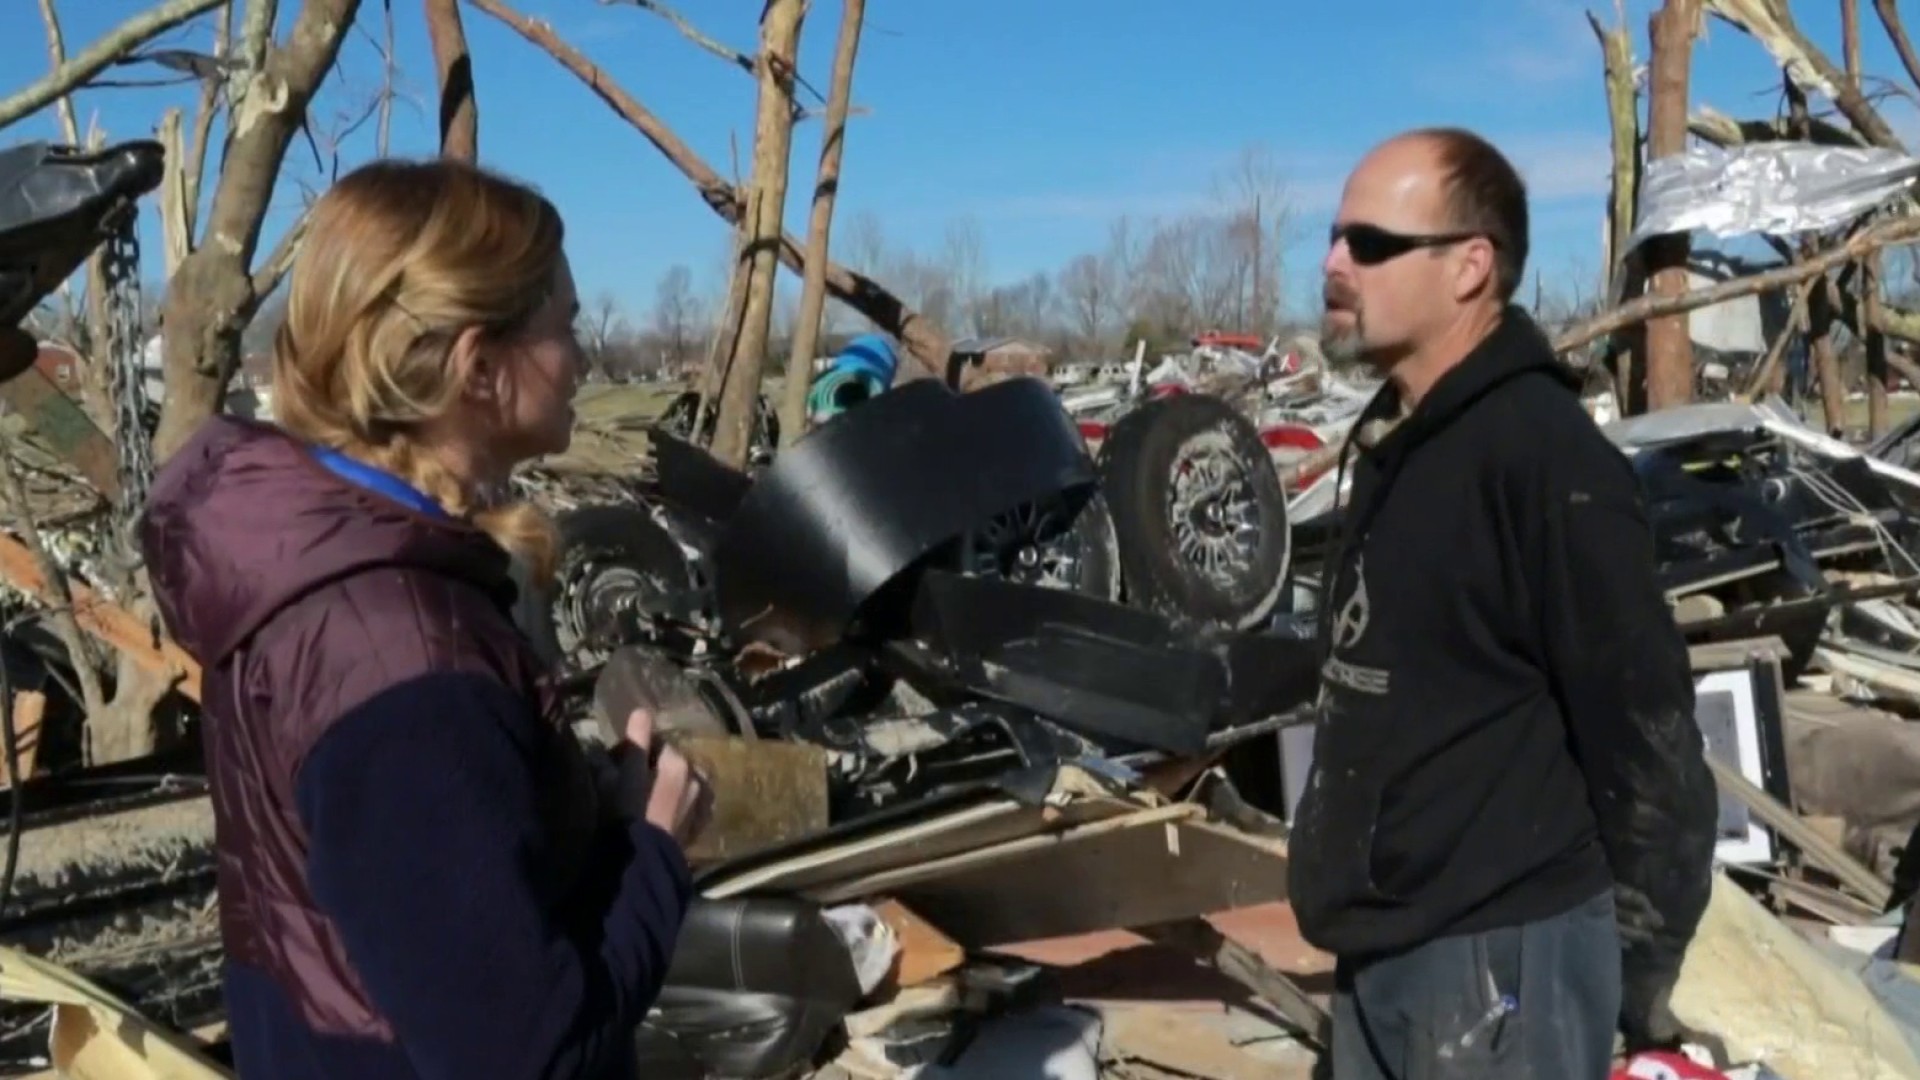 ‘It’s heartbreaking:’ Survivors speak about tornadoes, destruction caused by storms